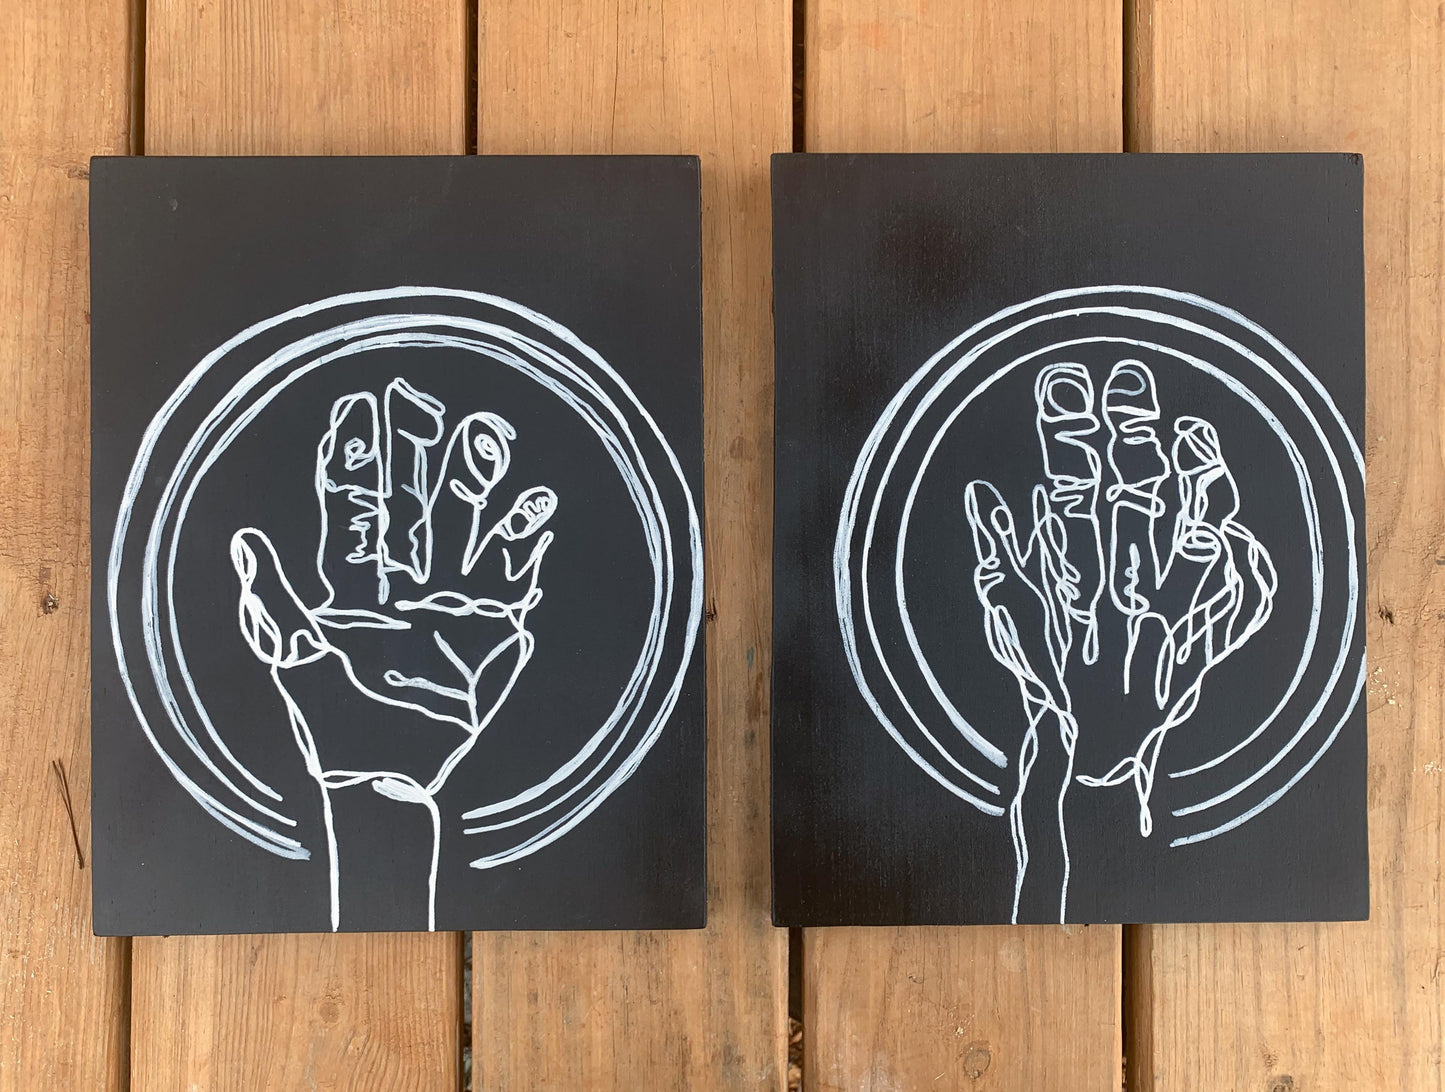 Blind Contour Hands paintings